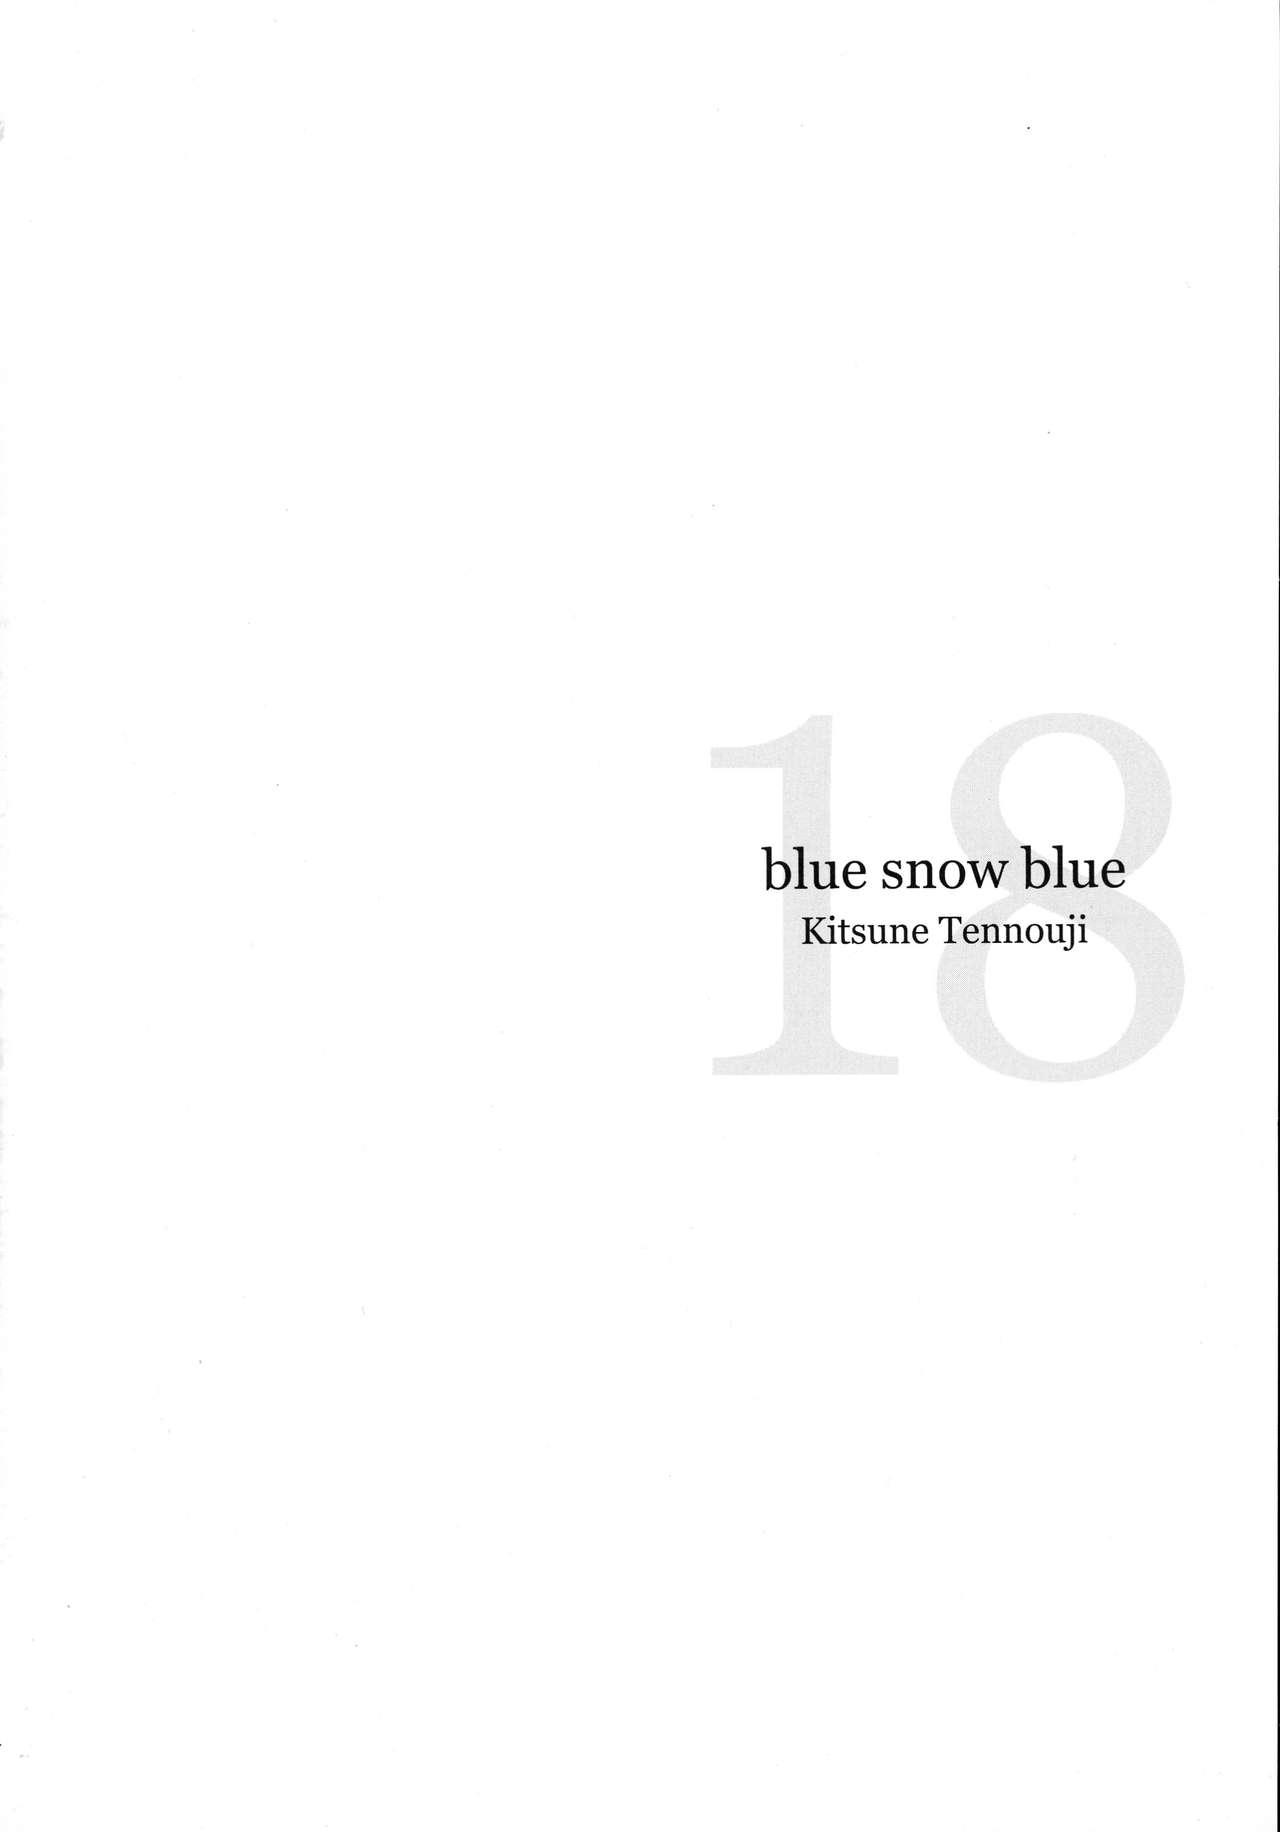 blue snow blue scene.18 3